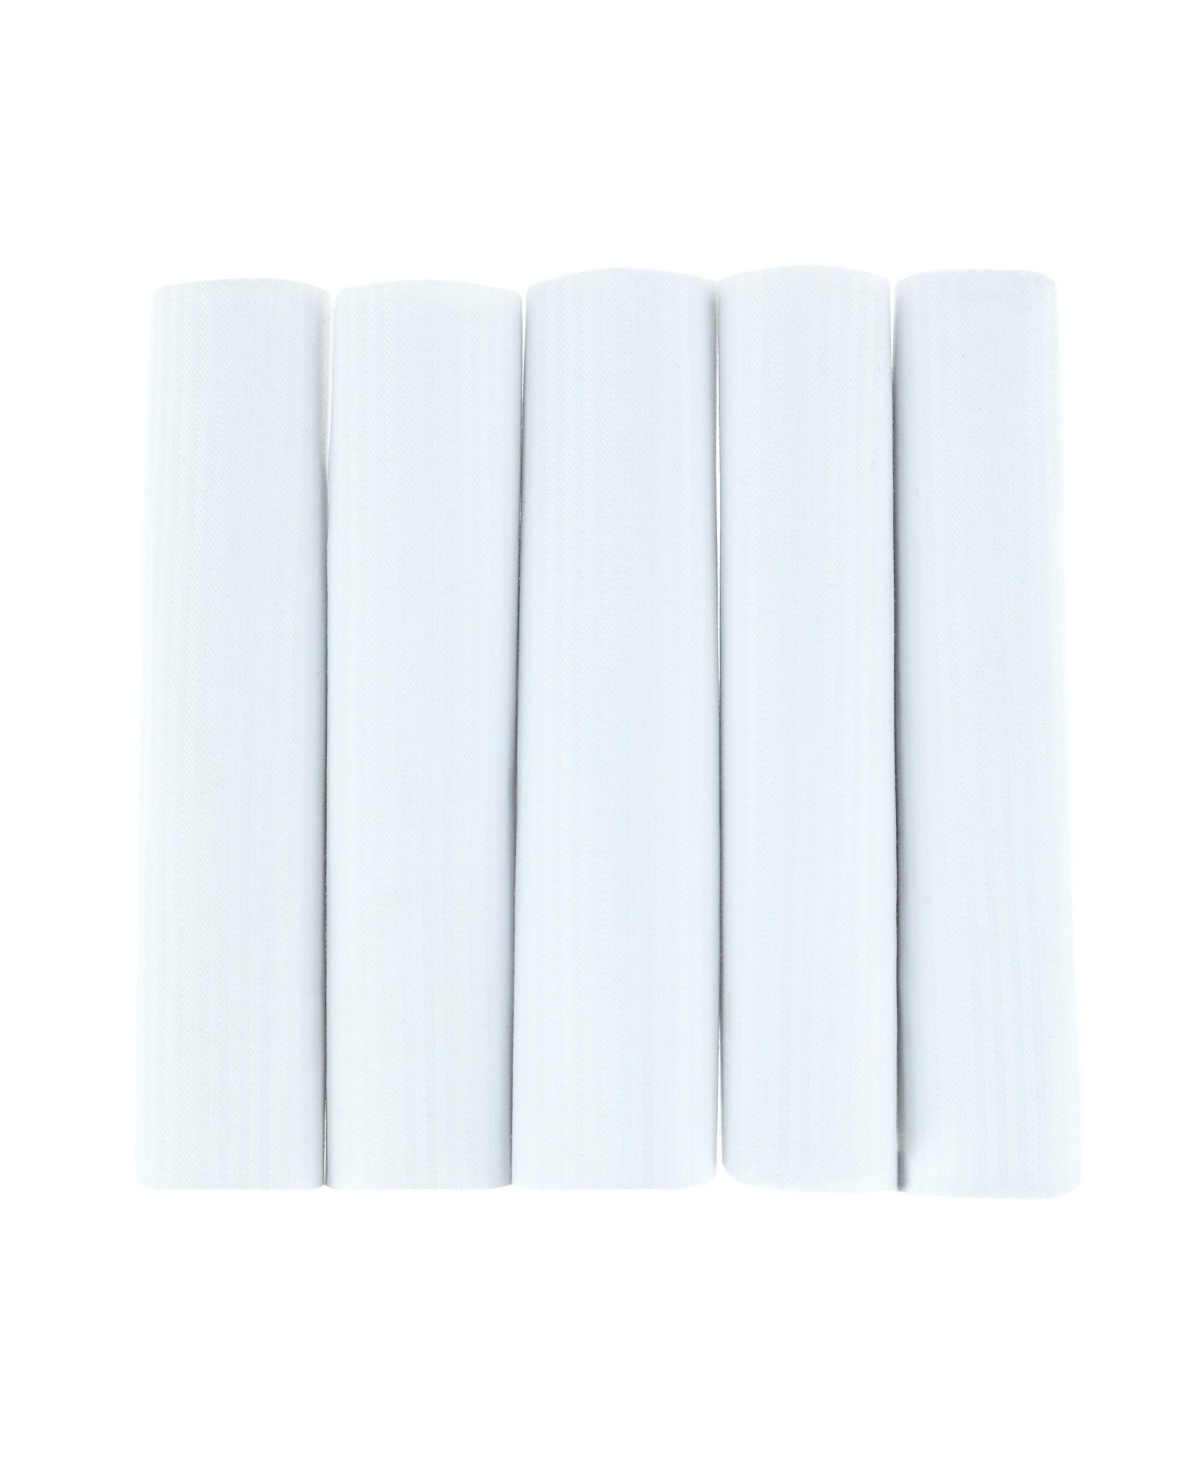 Men's Premium Cotton Handkerchiefs (Box of 5) - White